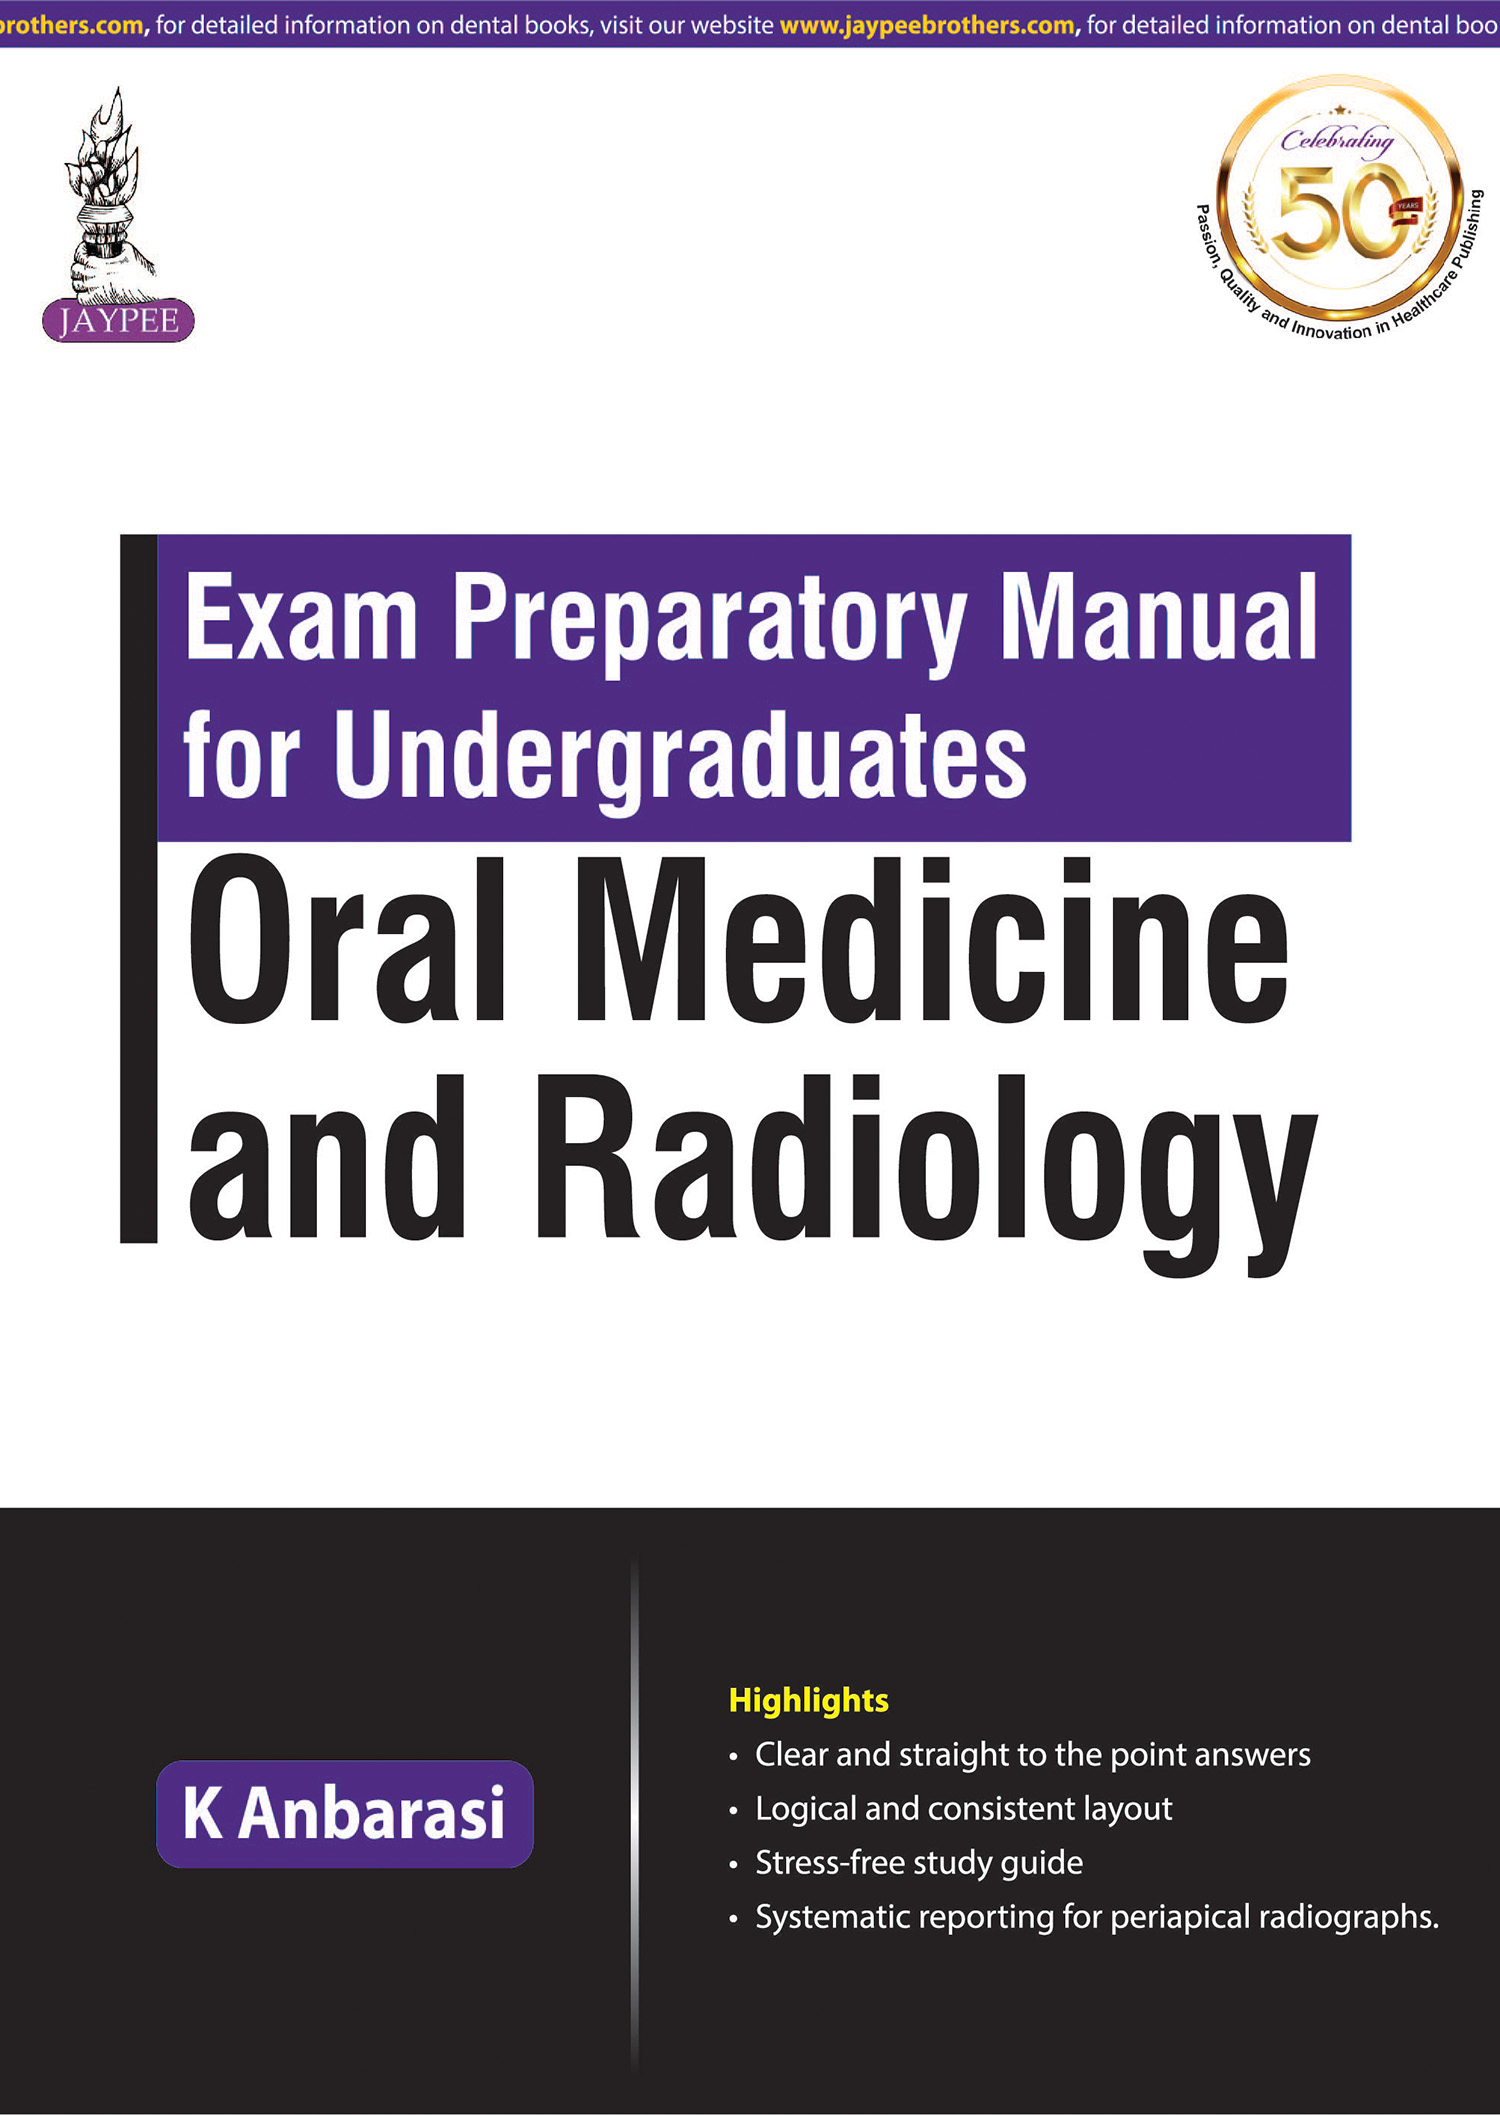 Exam Preparatory Manual For Undergraduates Oral Medicine And Radiology
